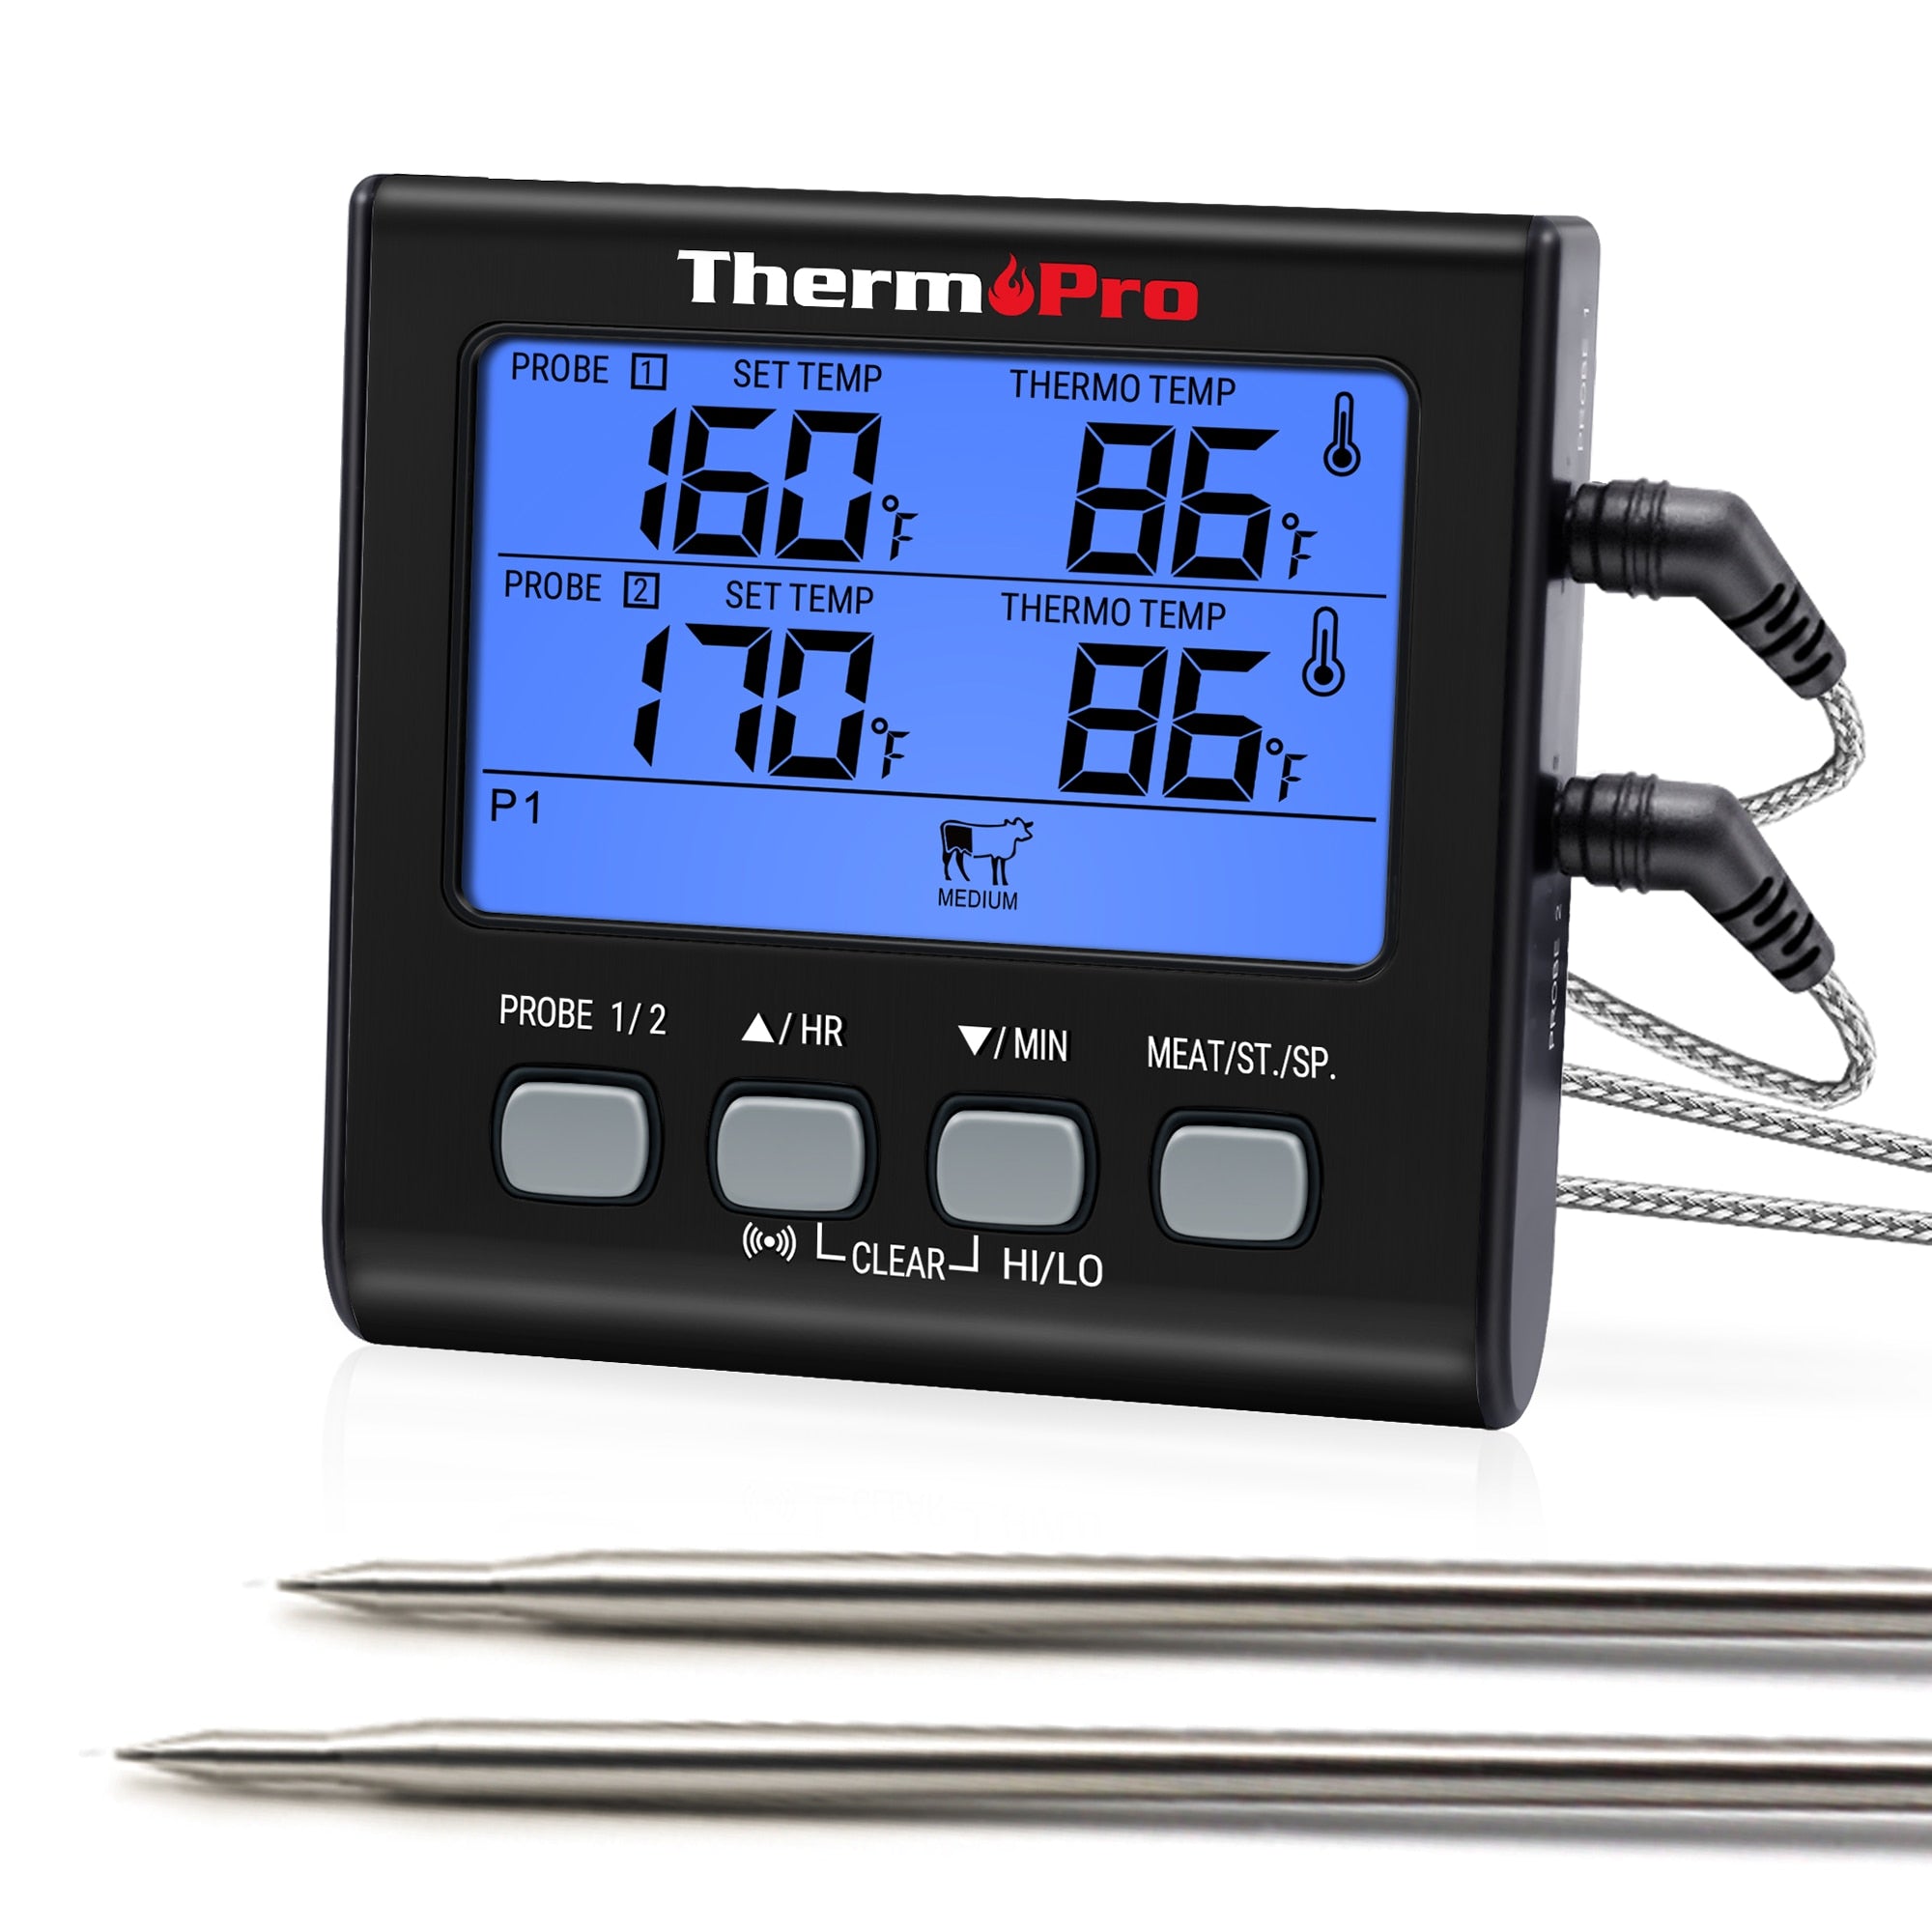 ThermoPro TP17 Digital Backlight Large LCD Display Dual Probe BBQ